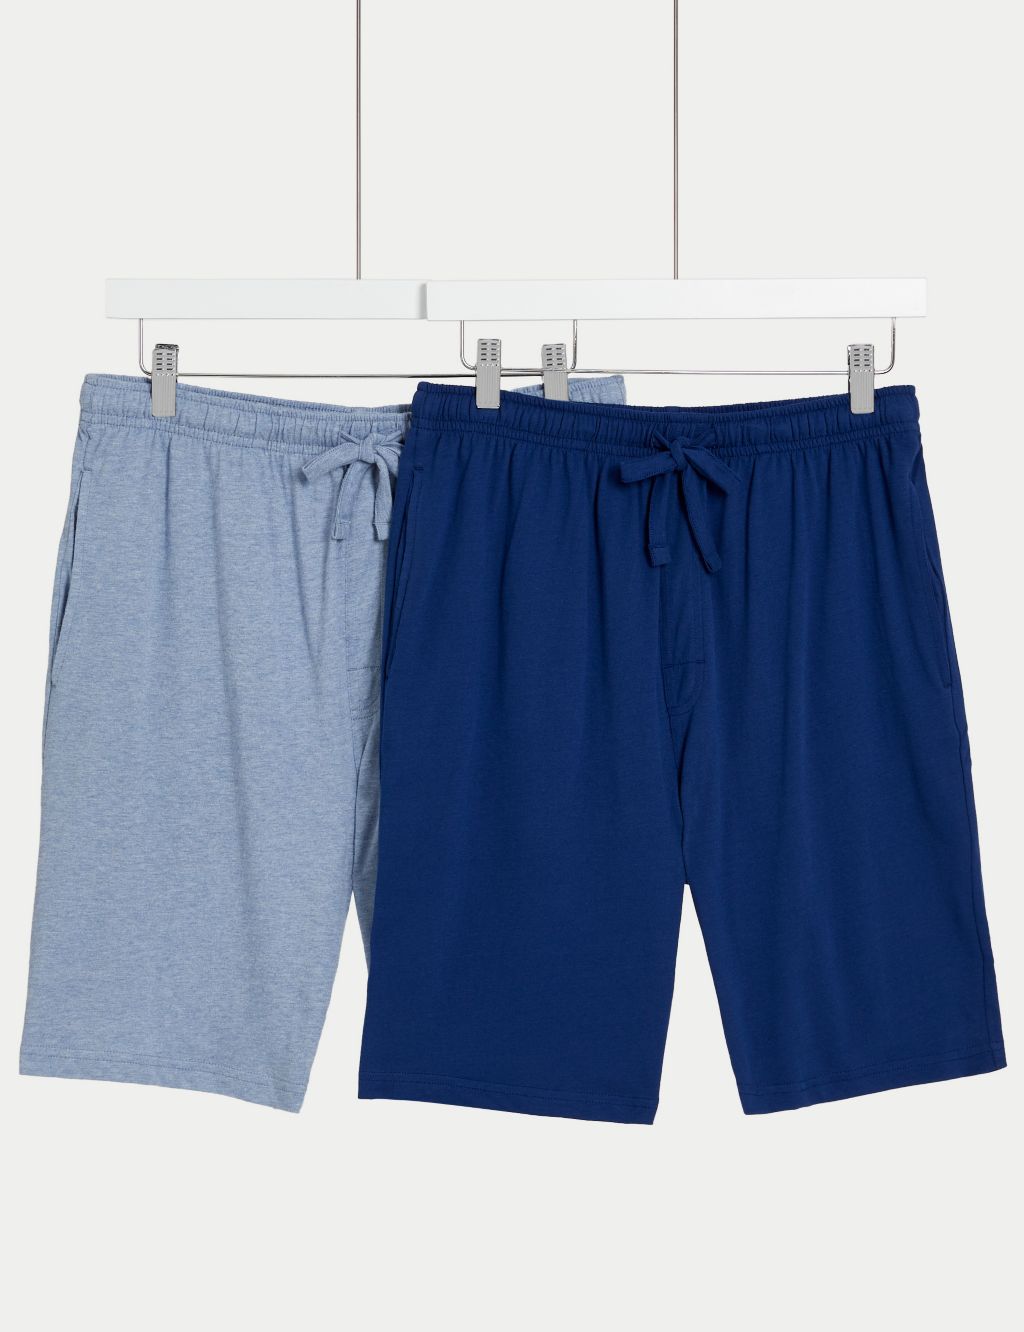 Men's Pyjamas, Cotton Bottoms & Jersey Shorts